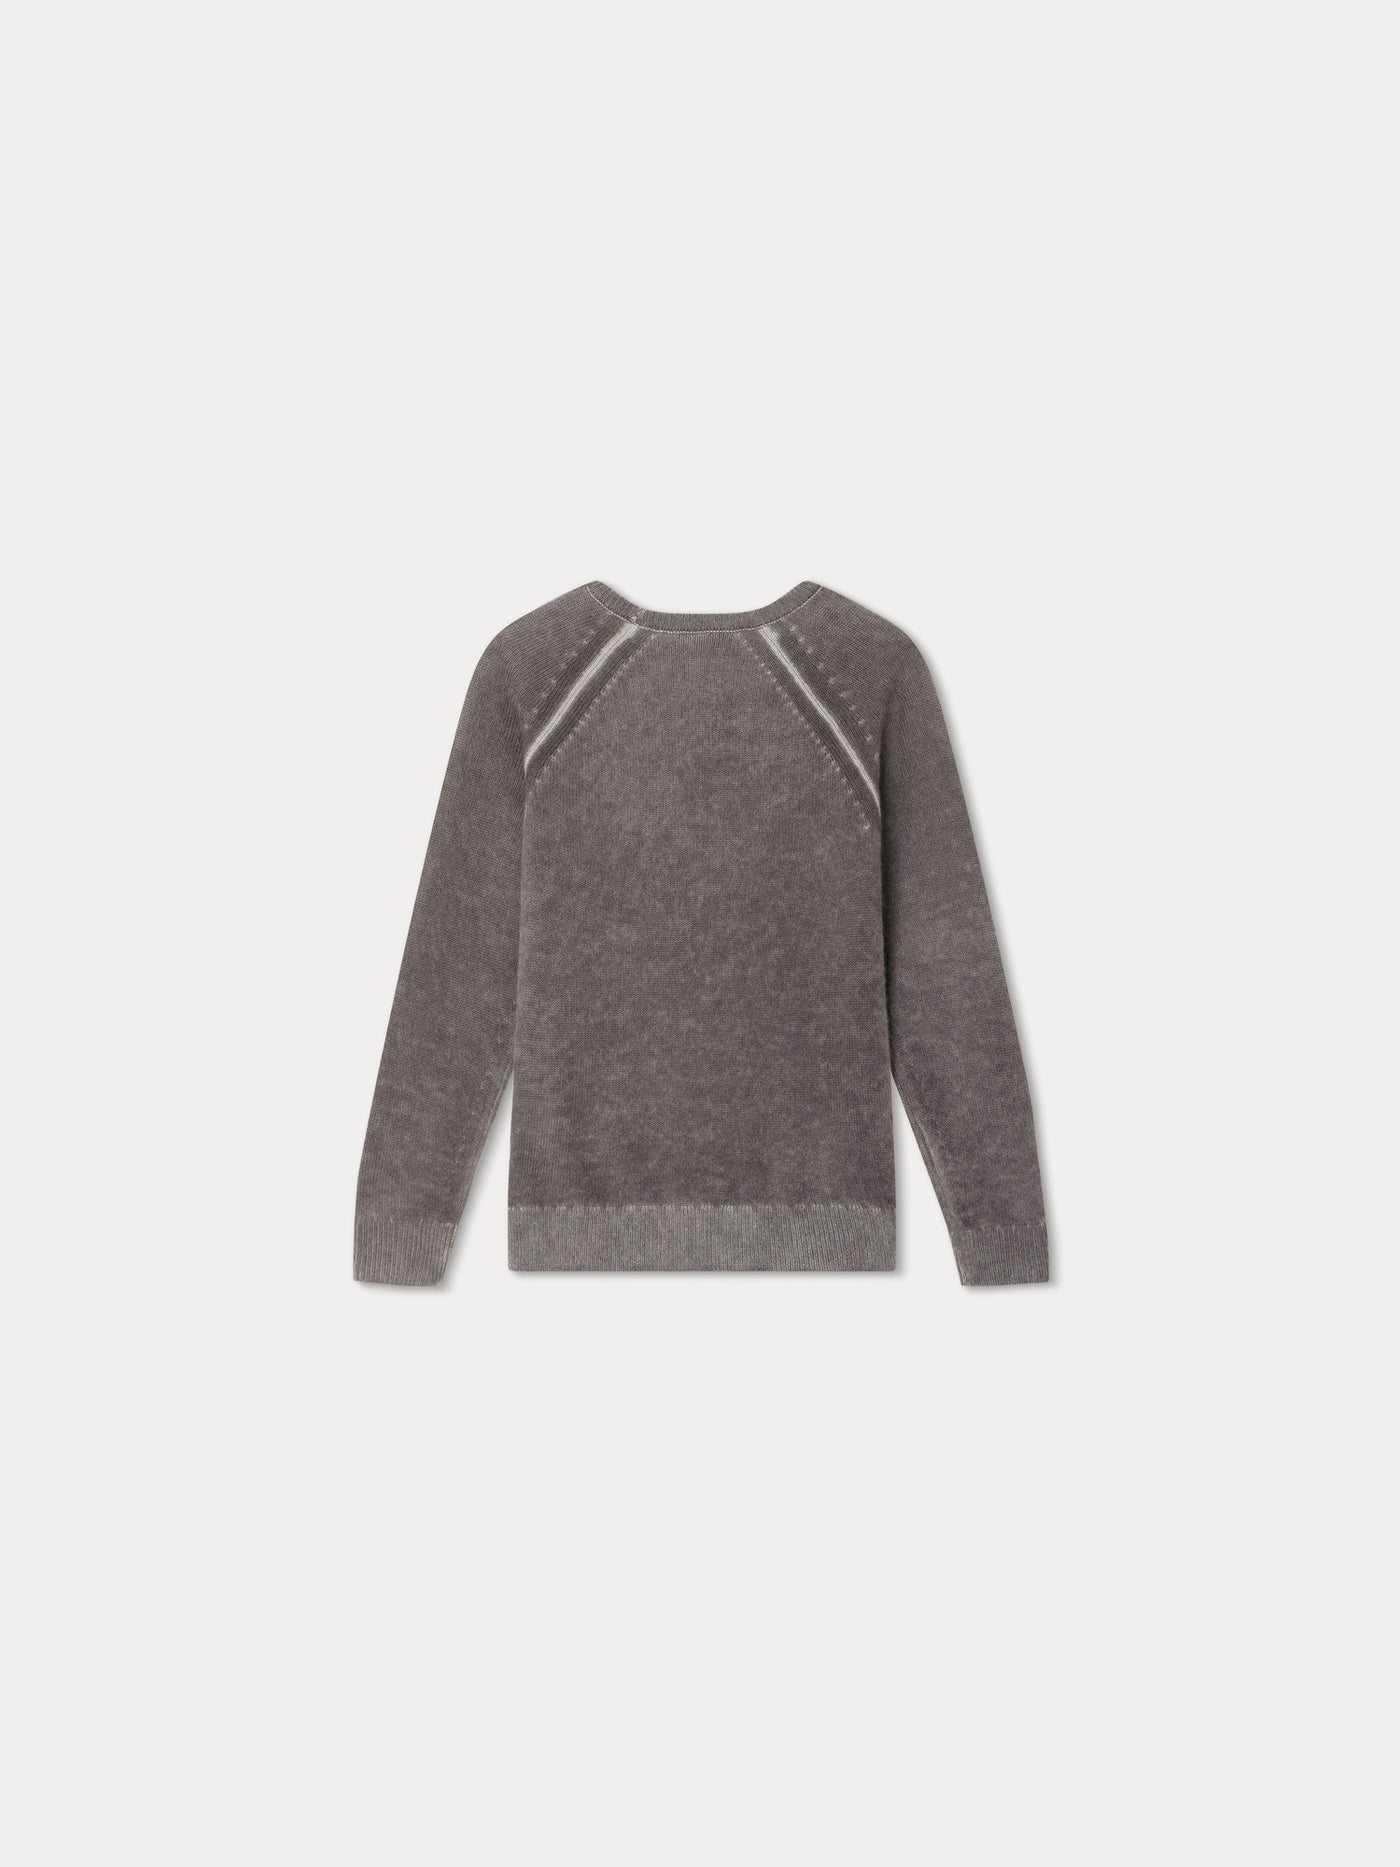 Tiego Sweater mauve gray